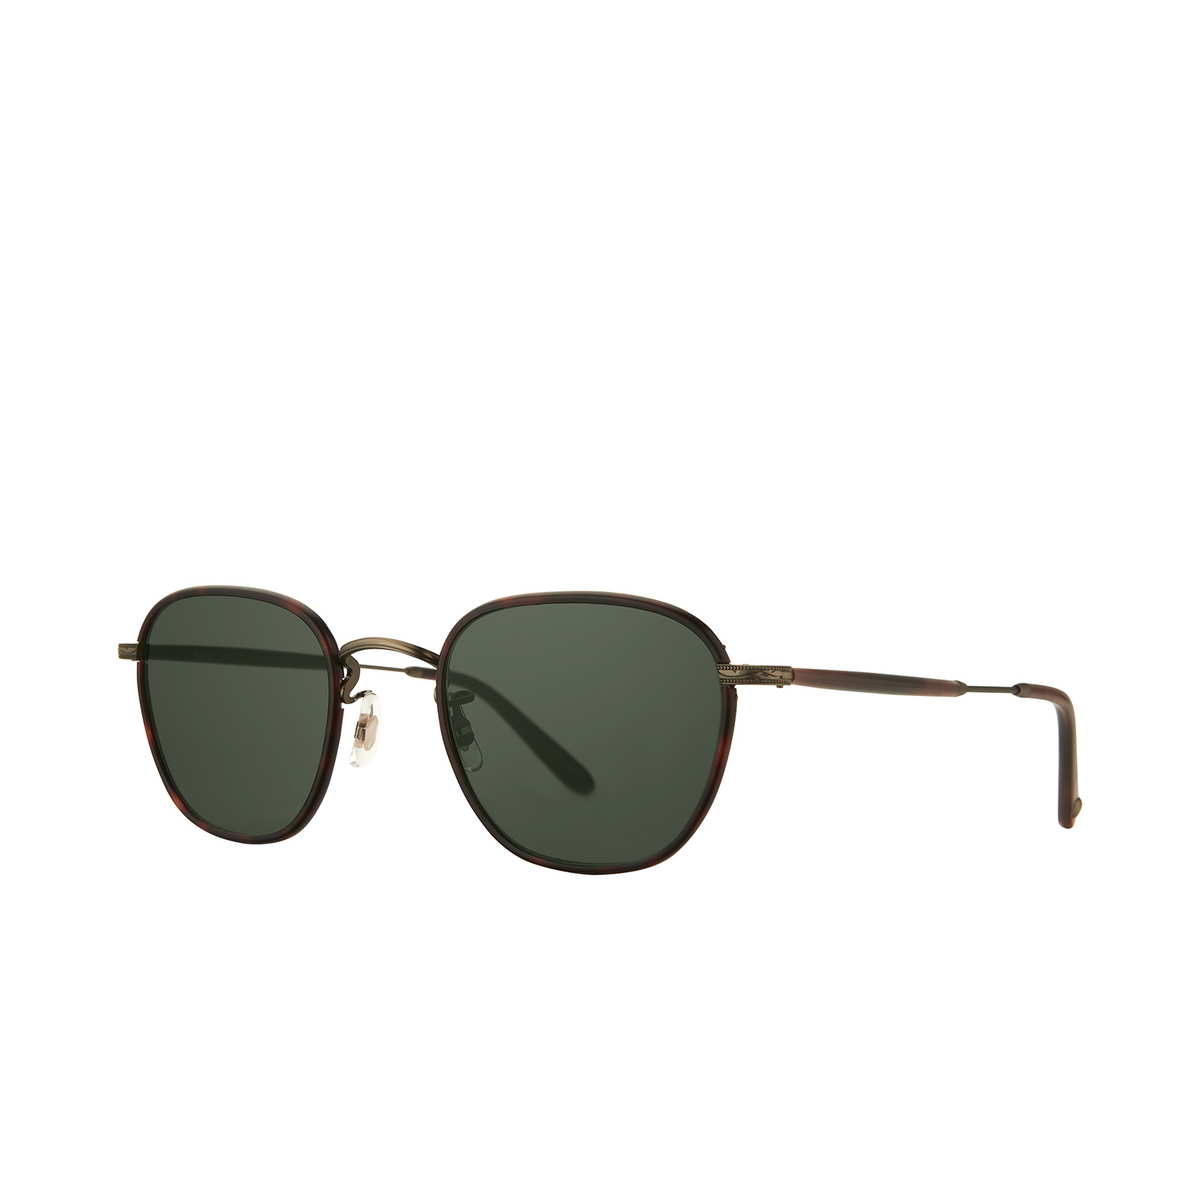 Garrett Leight® Square Sunglasses: Grant Sun color Matte Kona Tortoise - Antique Gold MKONT-ATGII-MRT/SFPG15 - three-quarters view.